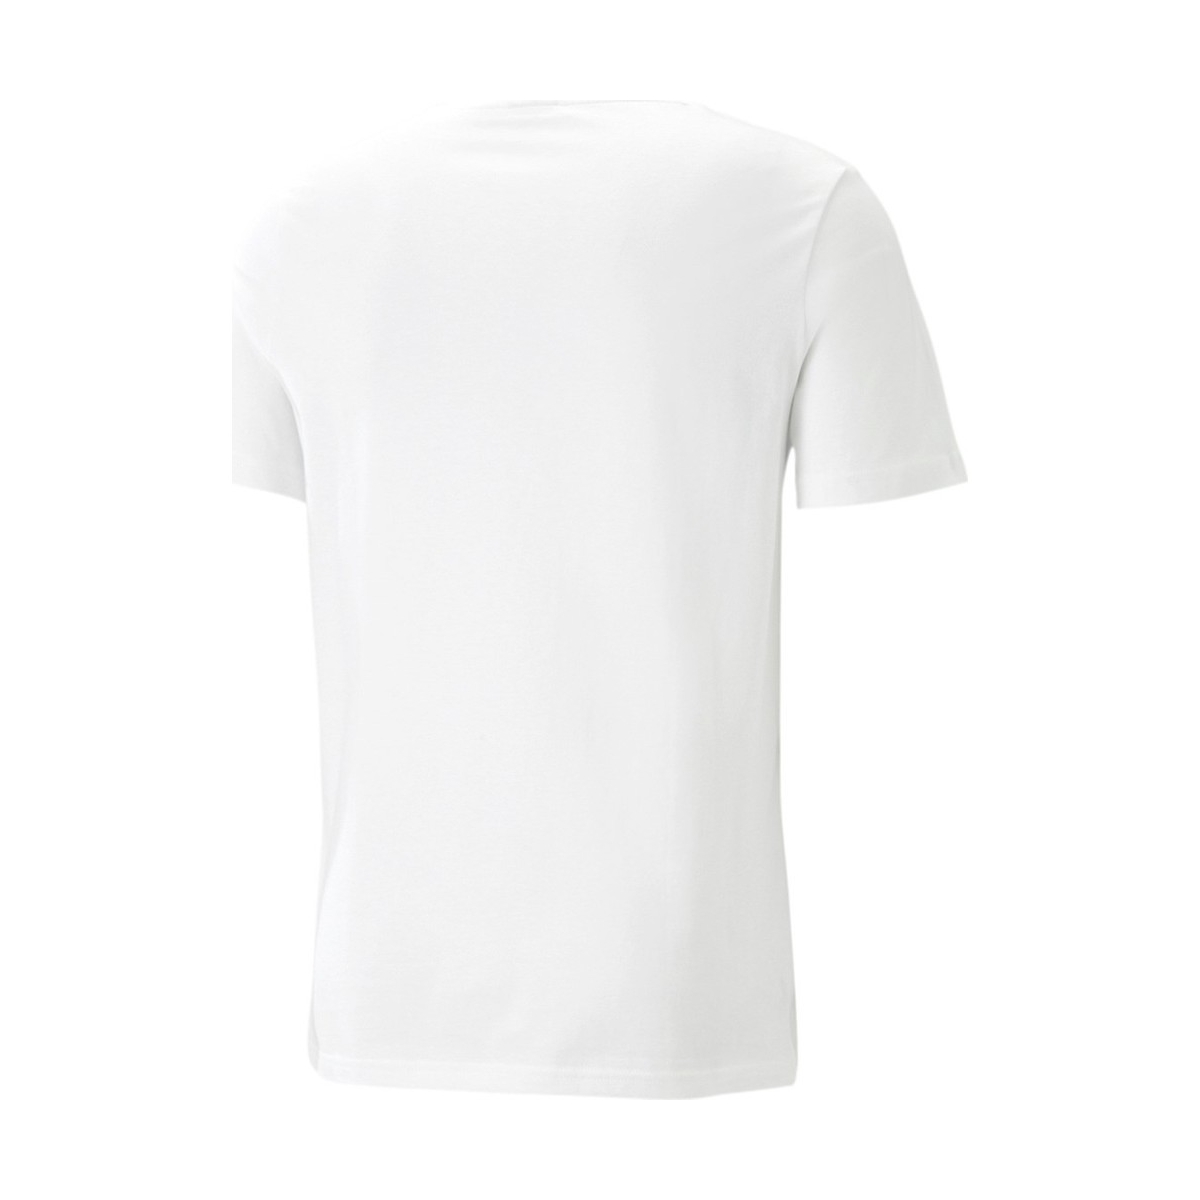 Puma Swxp Graphic Beyaz Tişört (538219-02)